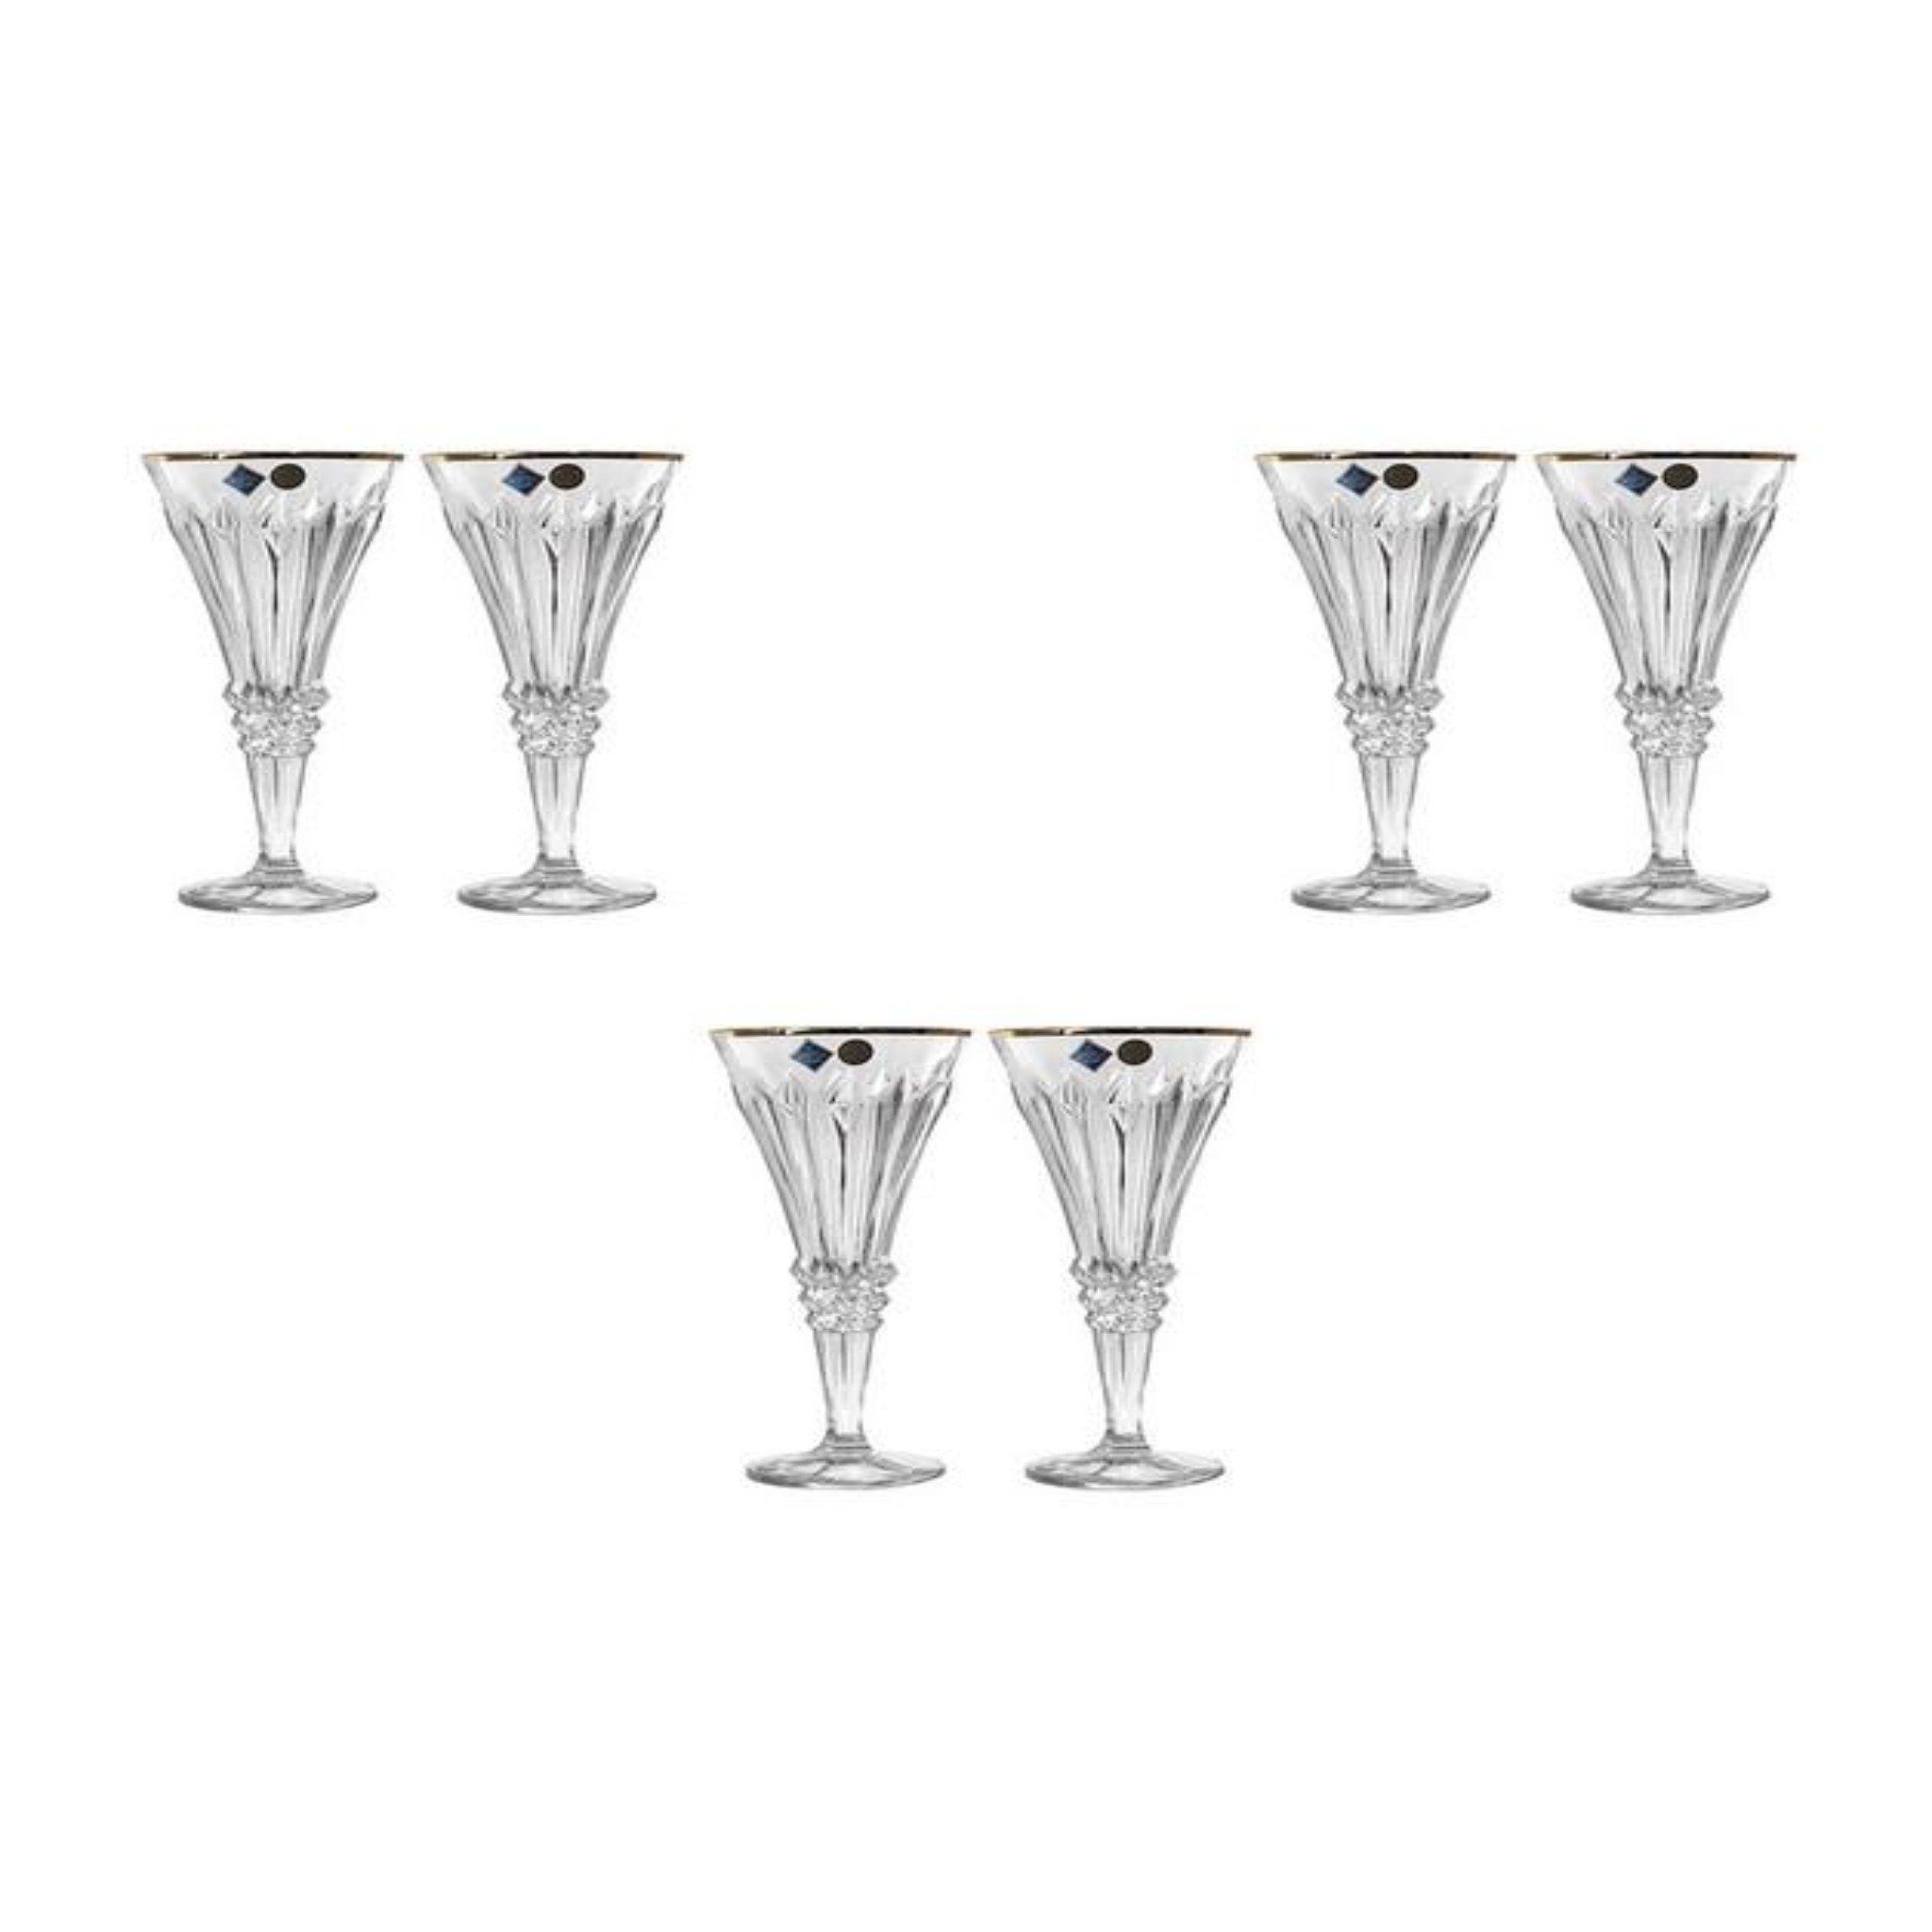 Bohemia Crystal Glass Set Of 6 Pieces - 2700013 - 180 ml - Gold Edge